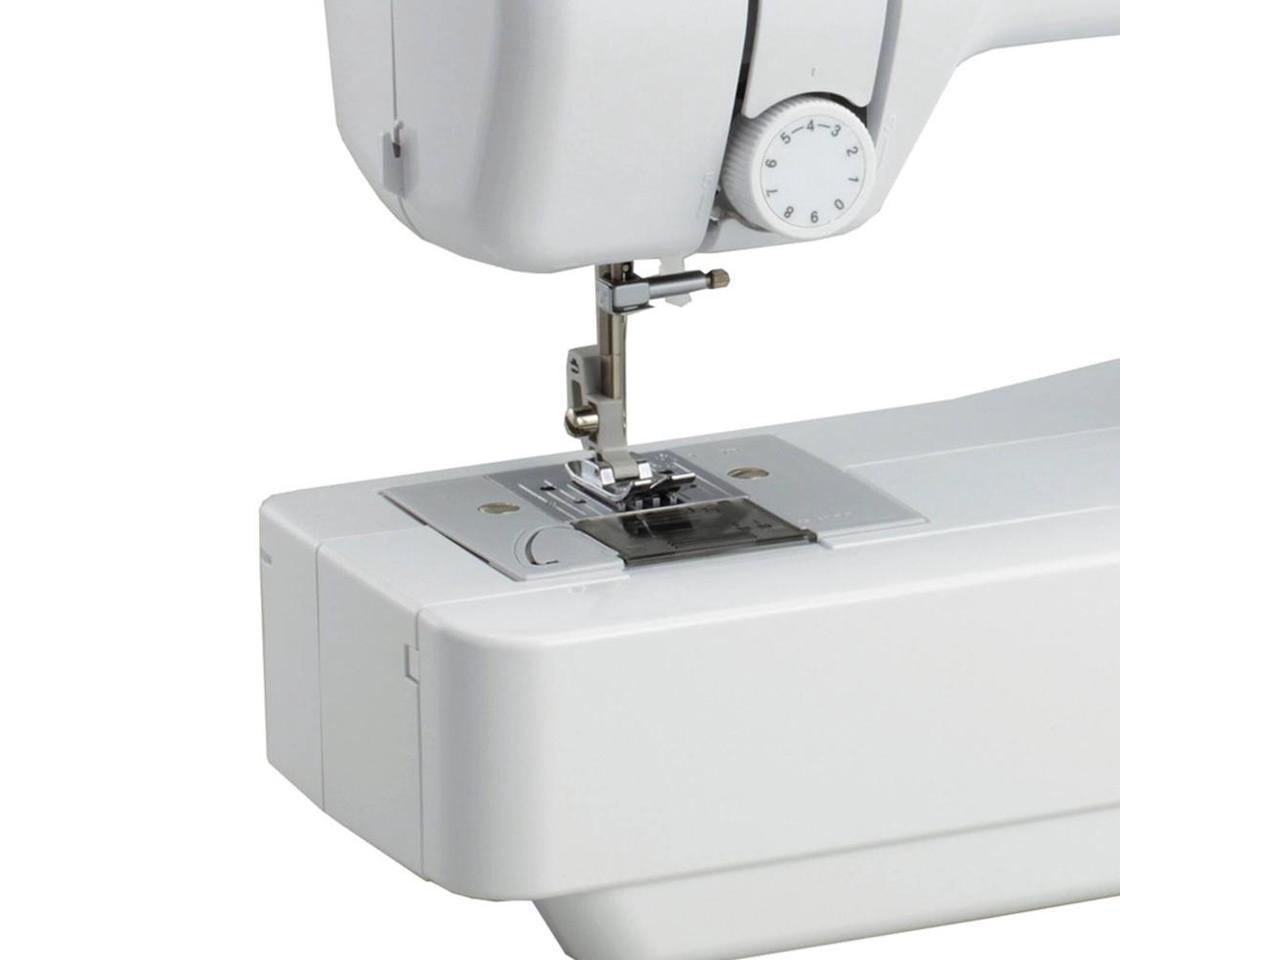 Brother SM1400 14-Stitch Sewing Machine 